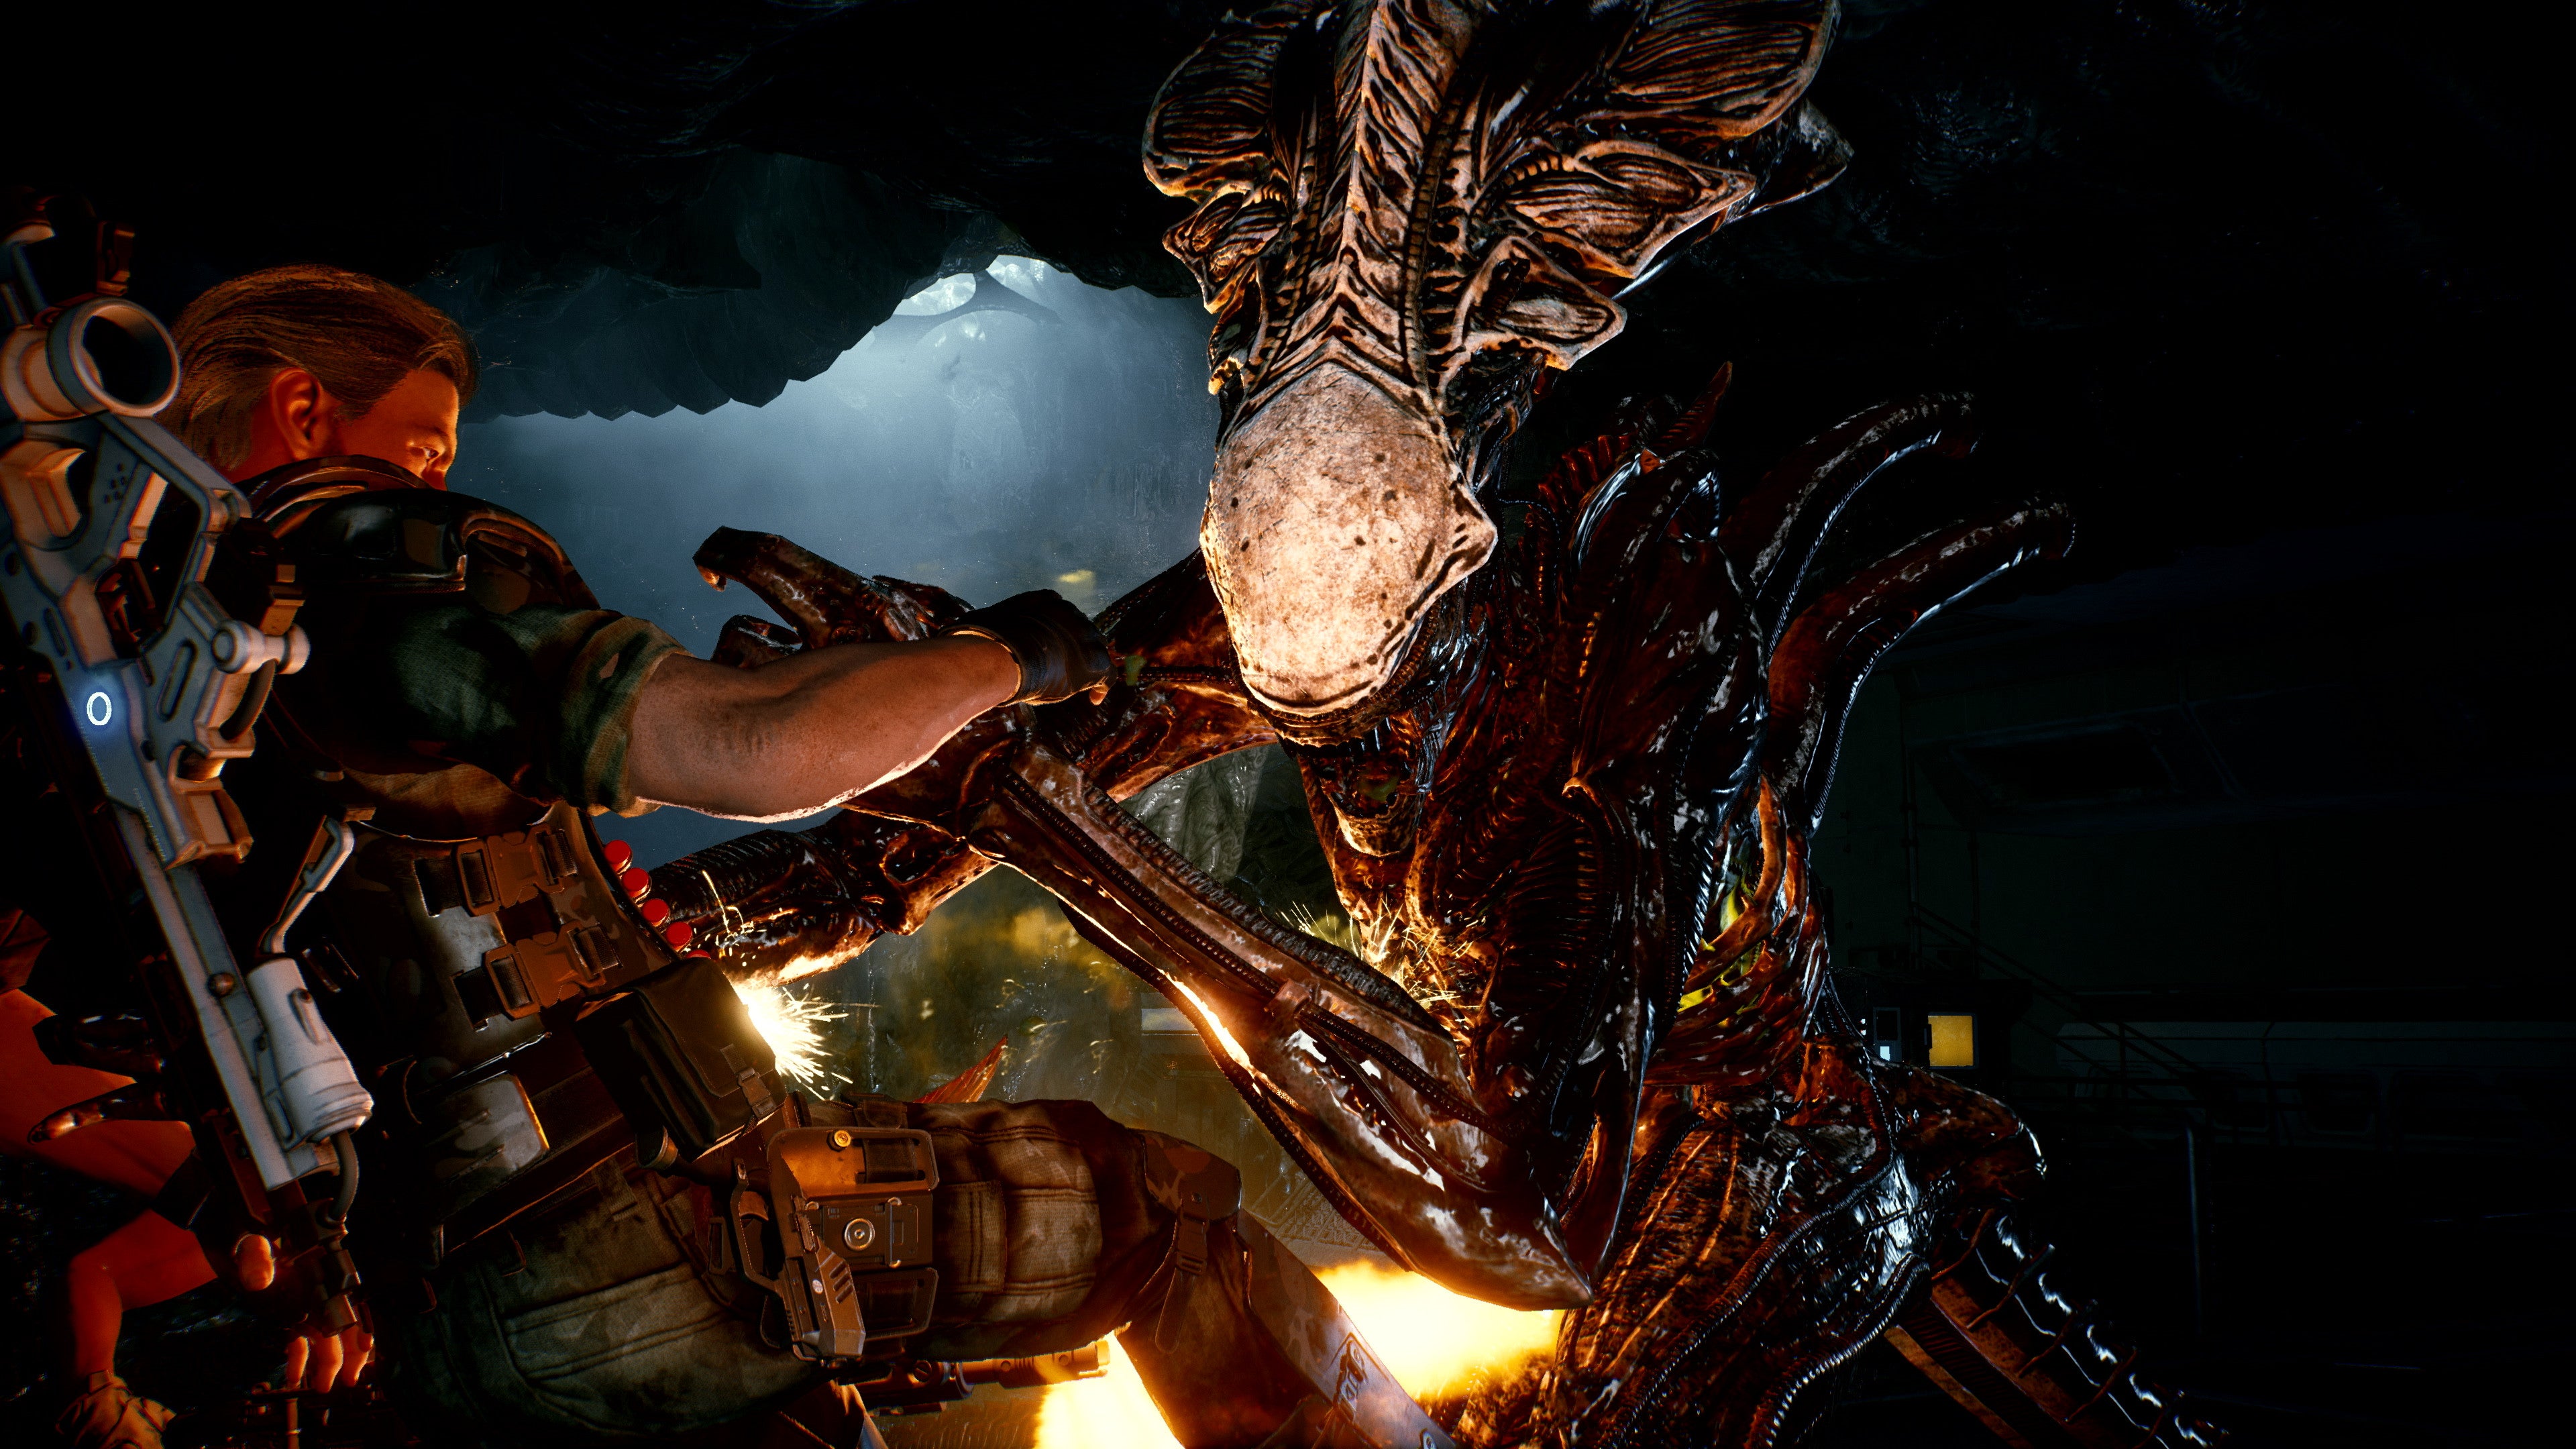 A xenomorph attacks a marine in Aliens: Fireteam screenshot.